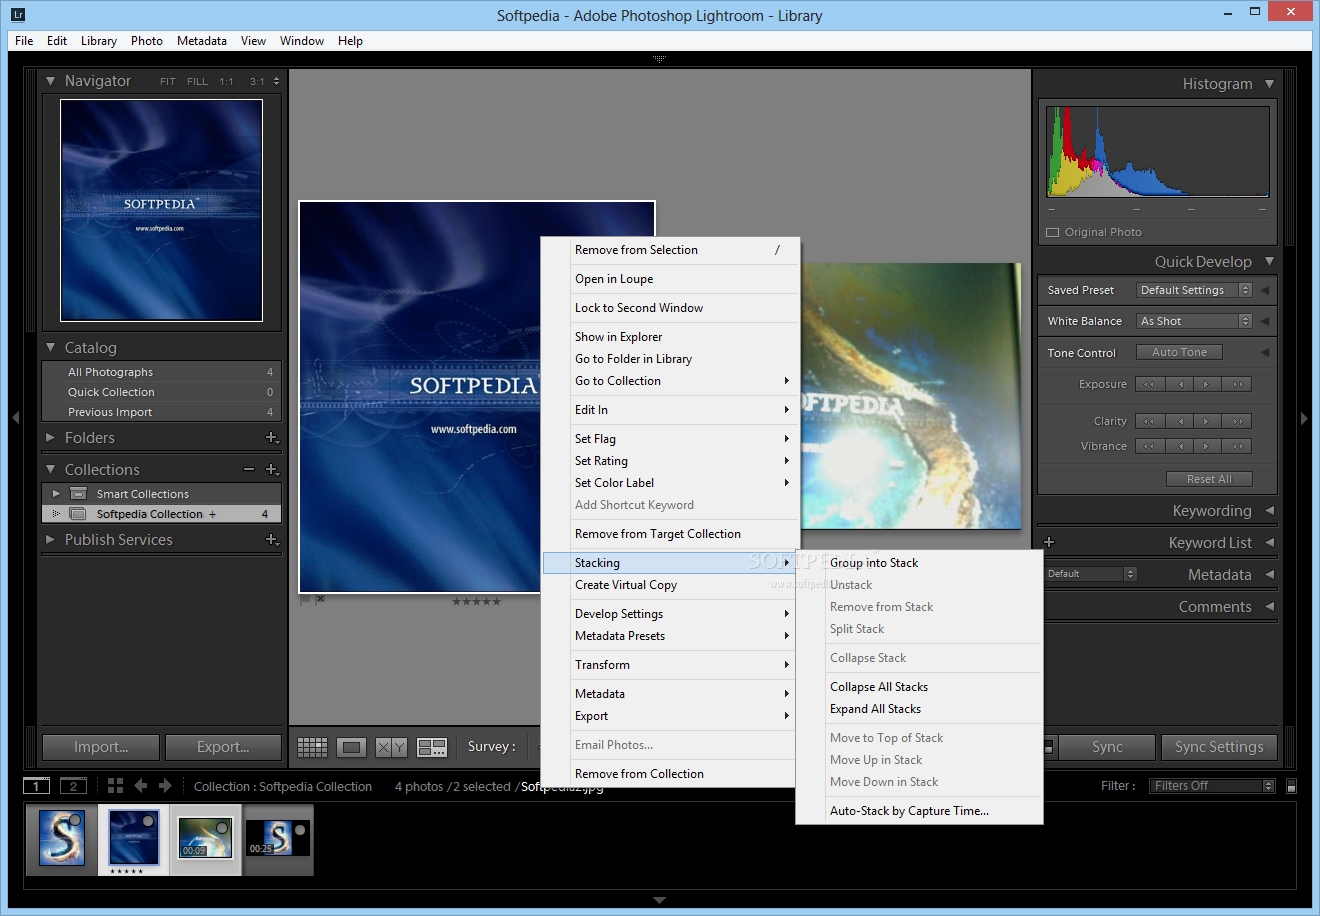 Adobe Lightroom 5 Free Download Full Version For Windows 8 12